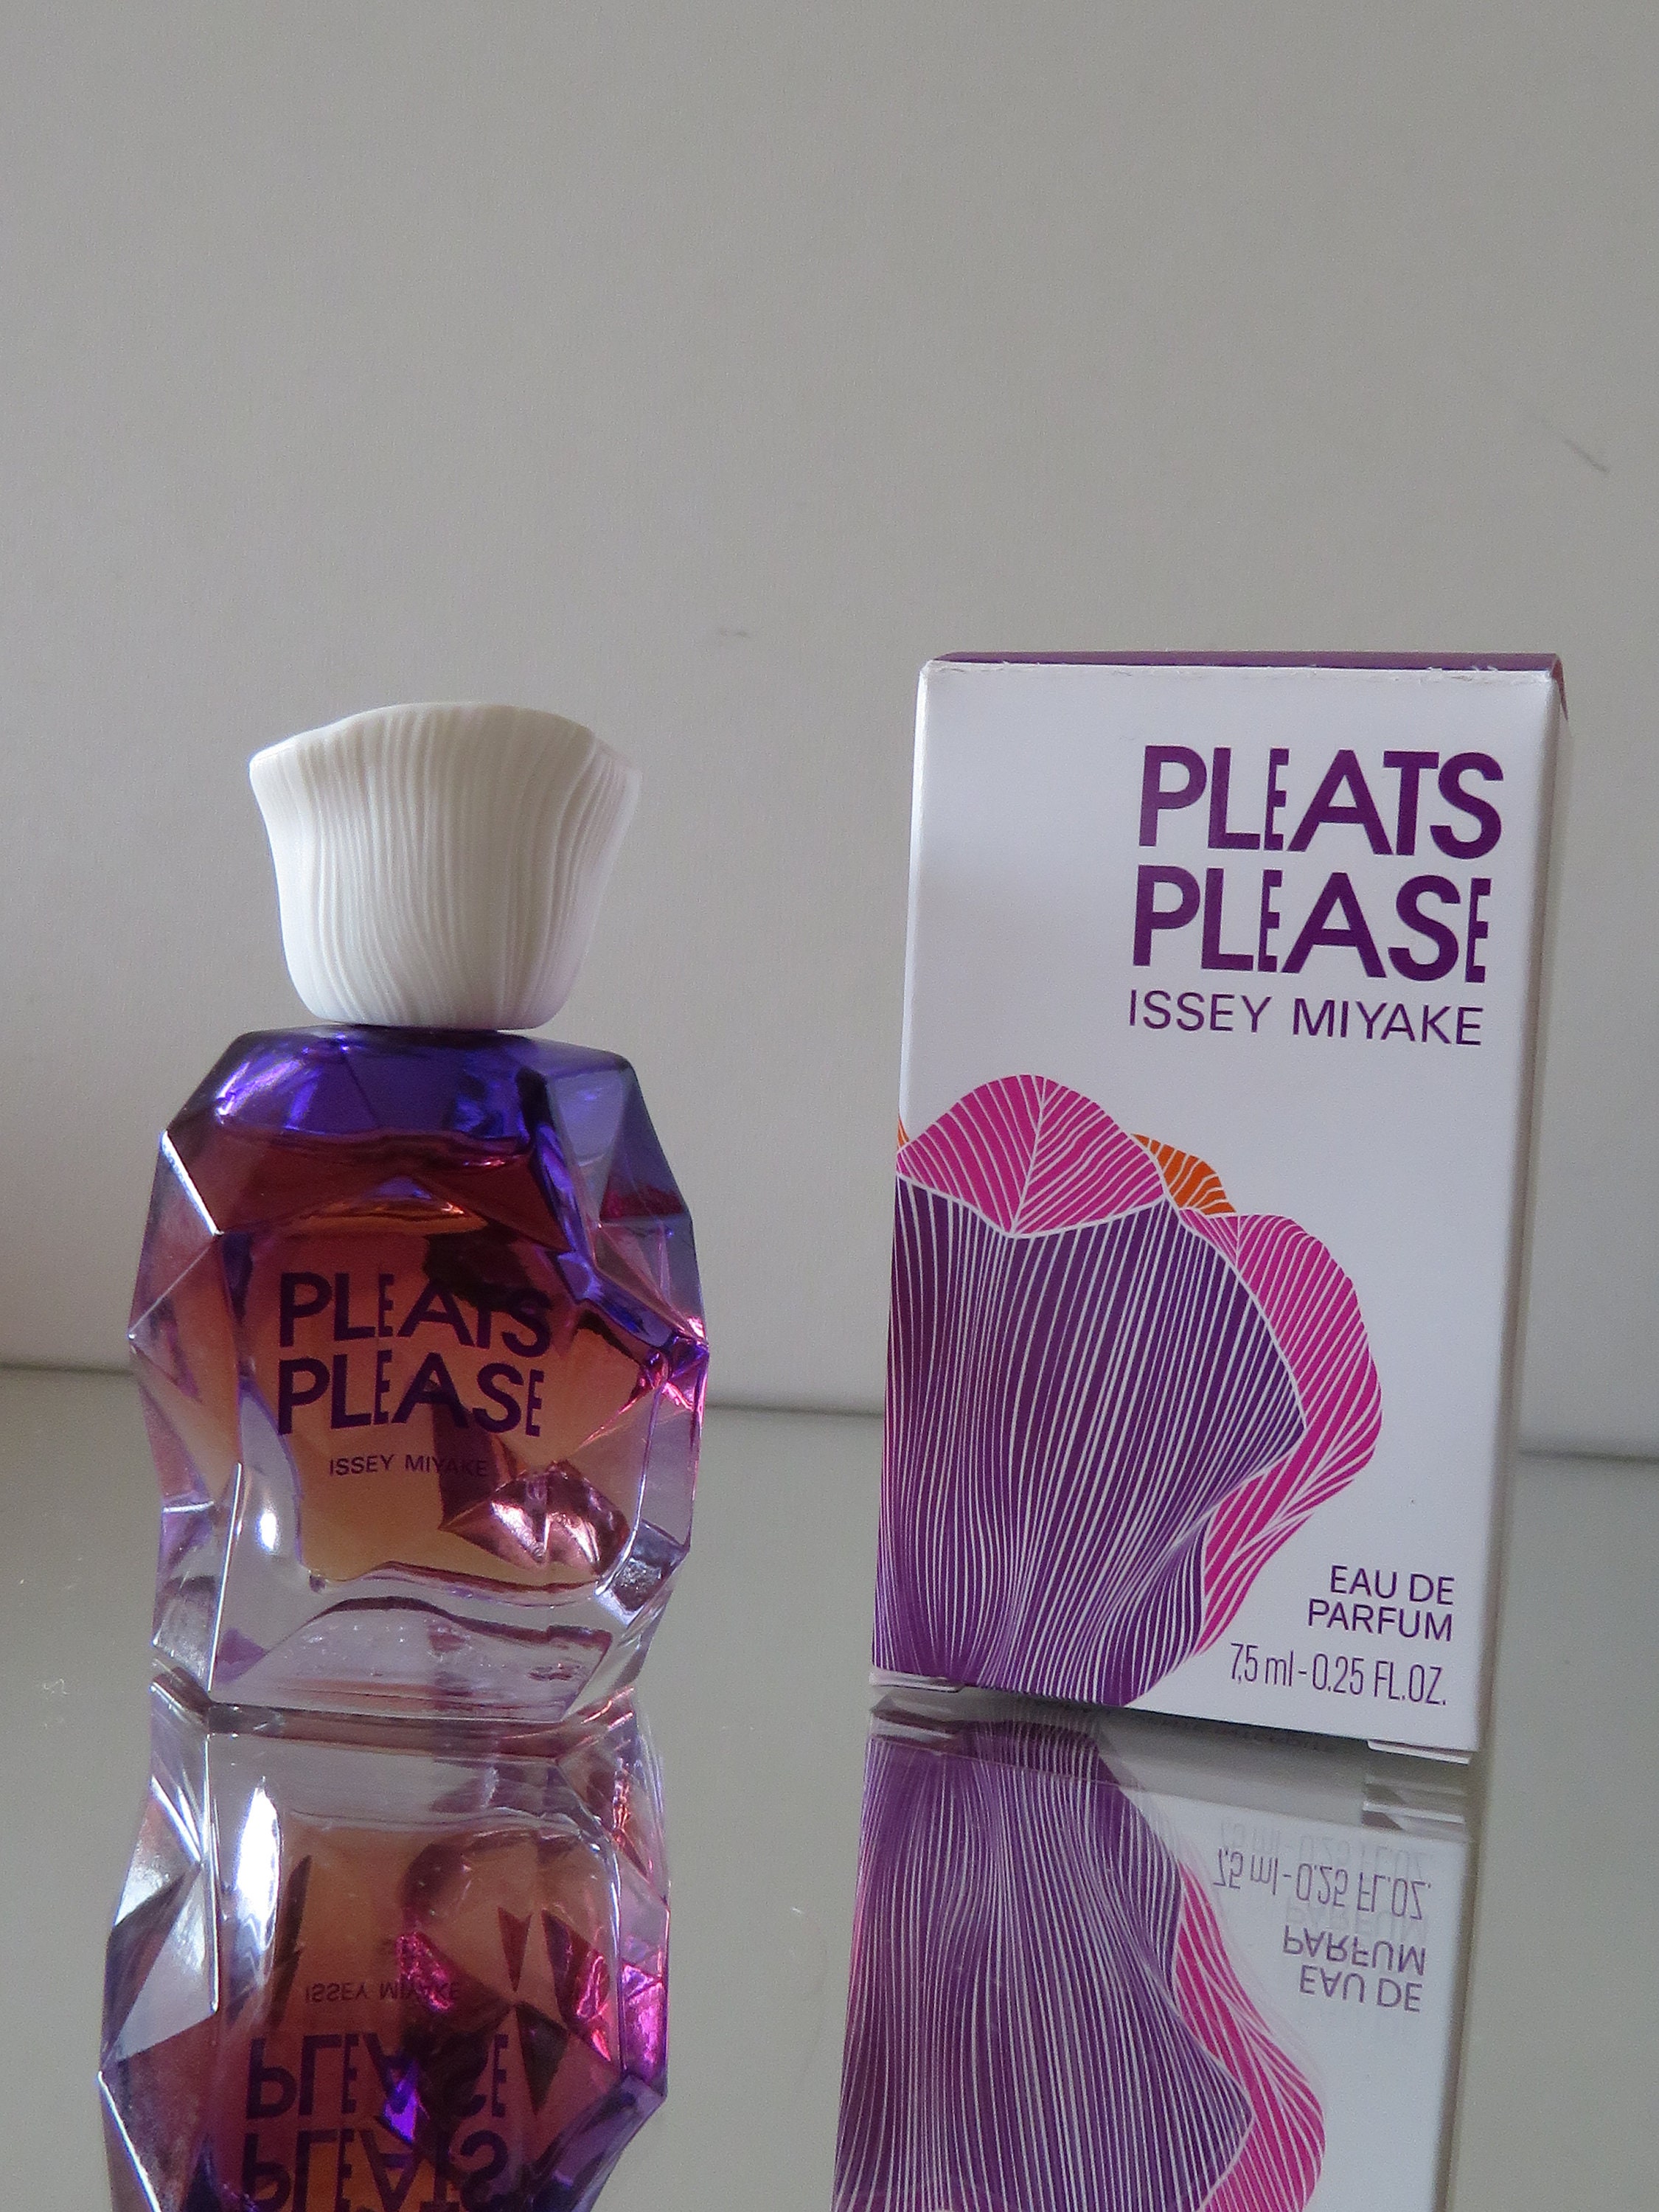 Pleats Please by Issey Miyake FULL Miniature Perfume 